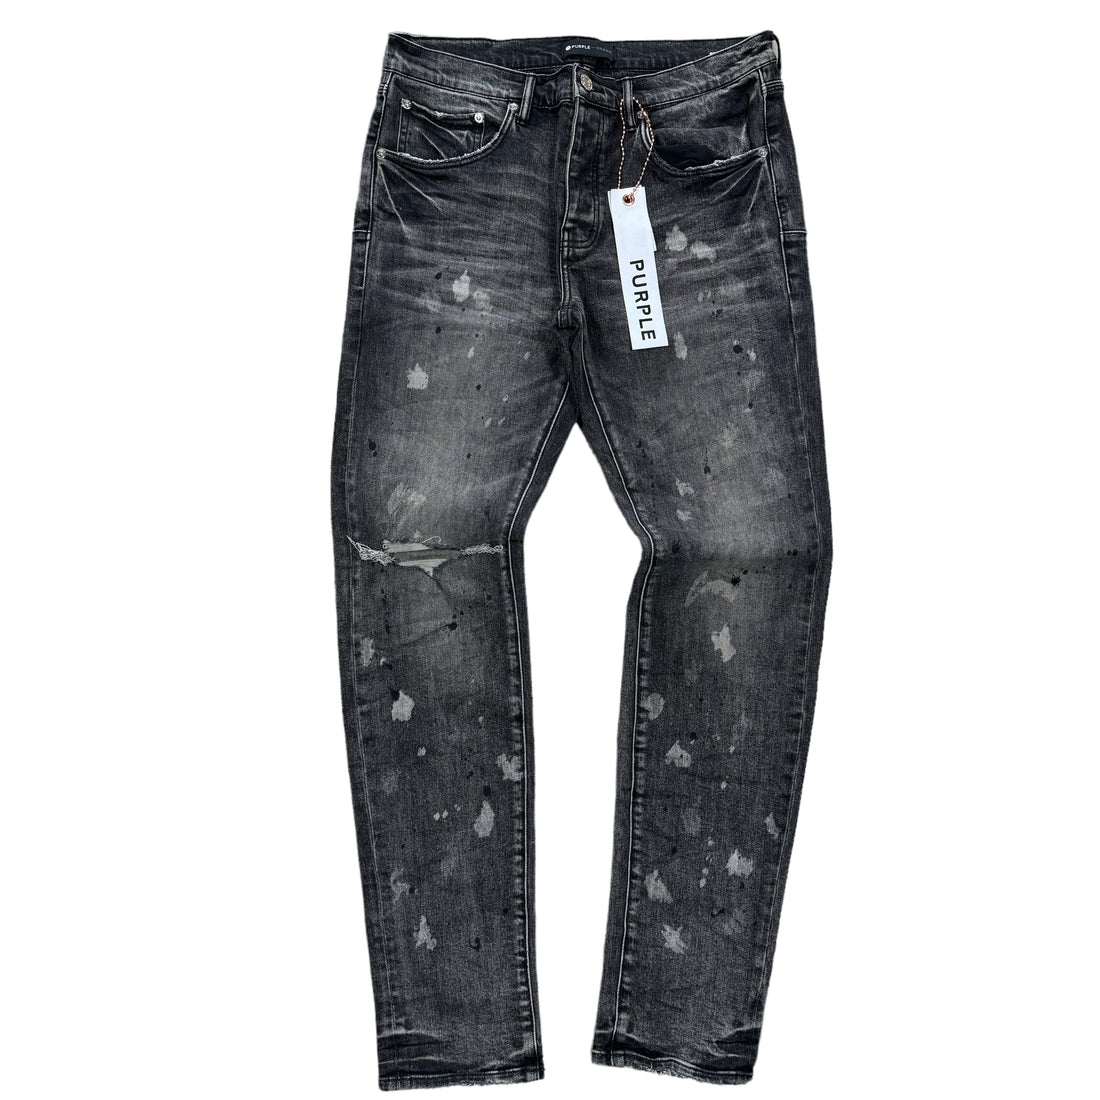 Purple Brand Jeans Black/Gray Wash